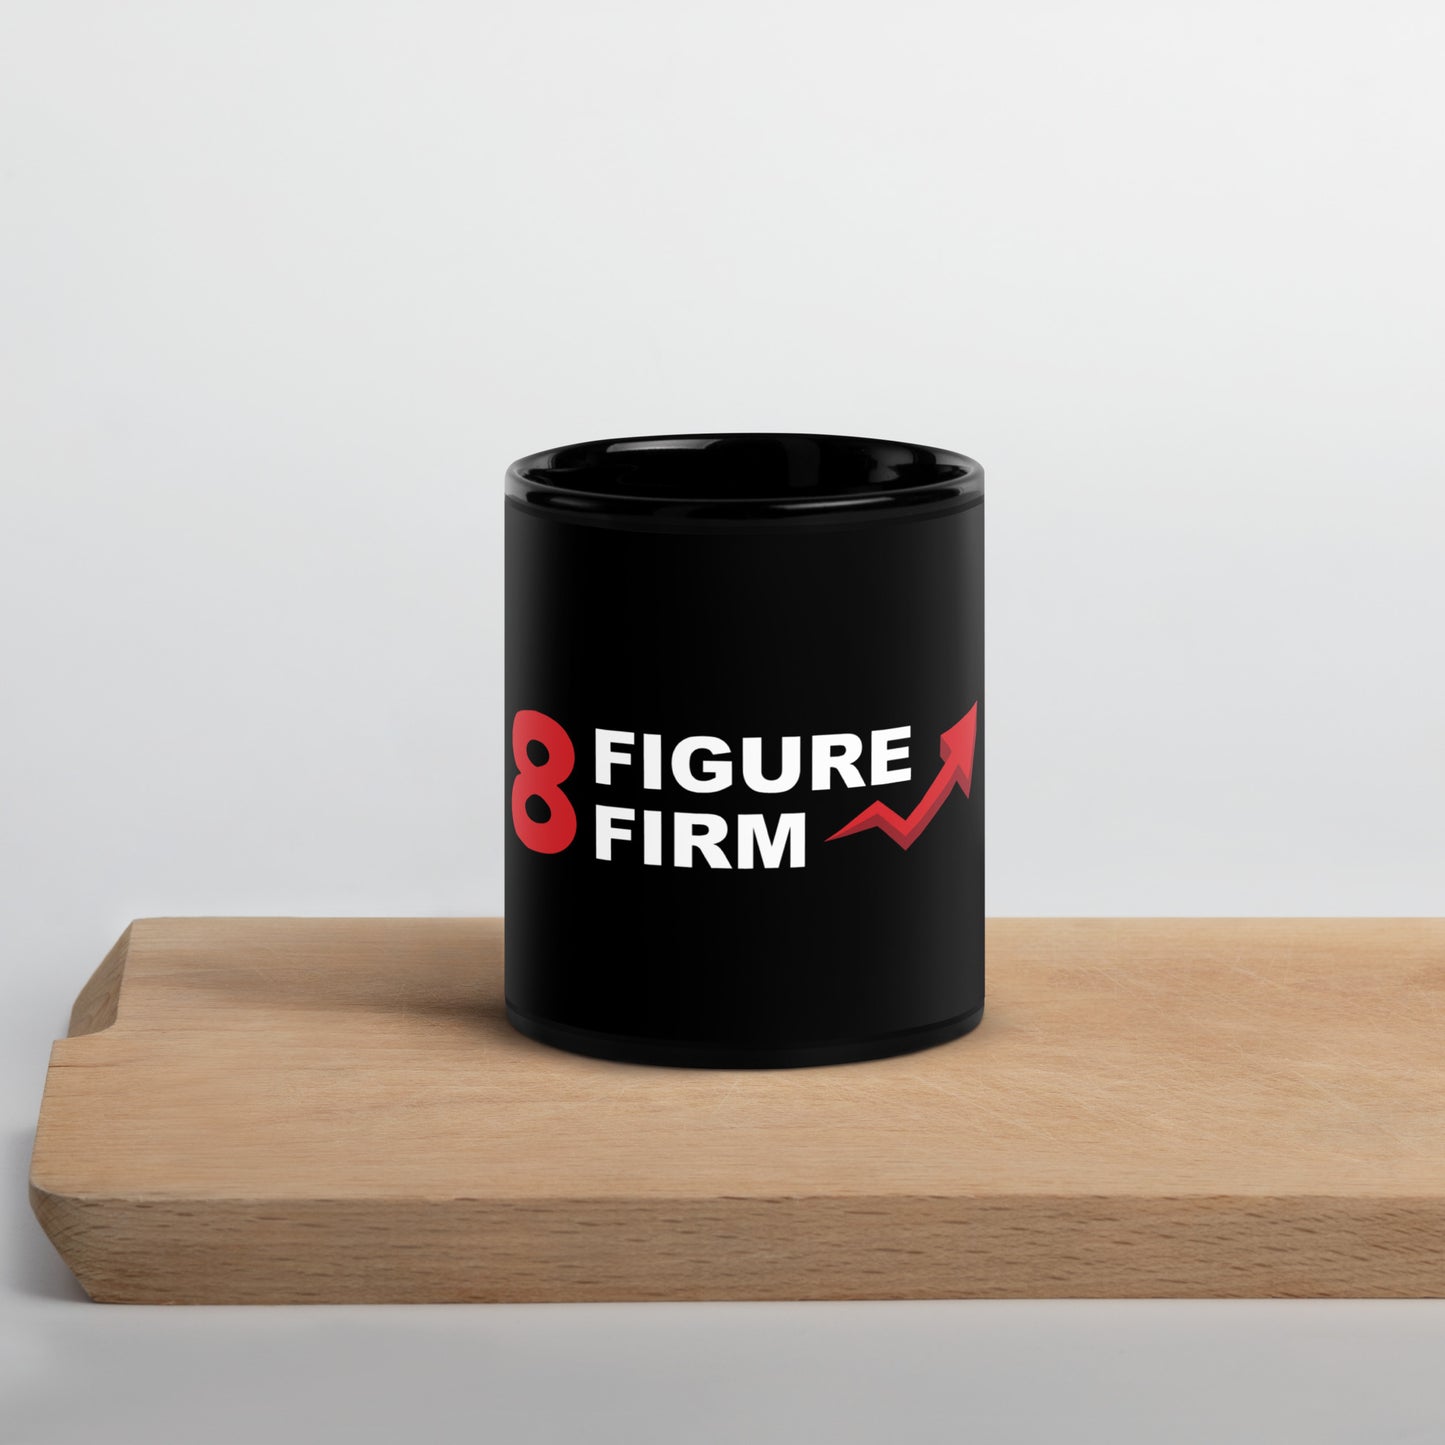 8 Figure Firm Black Glossy Mug